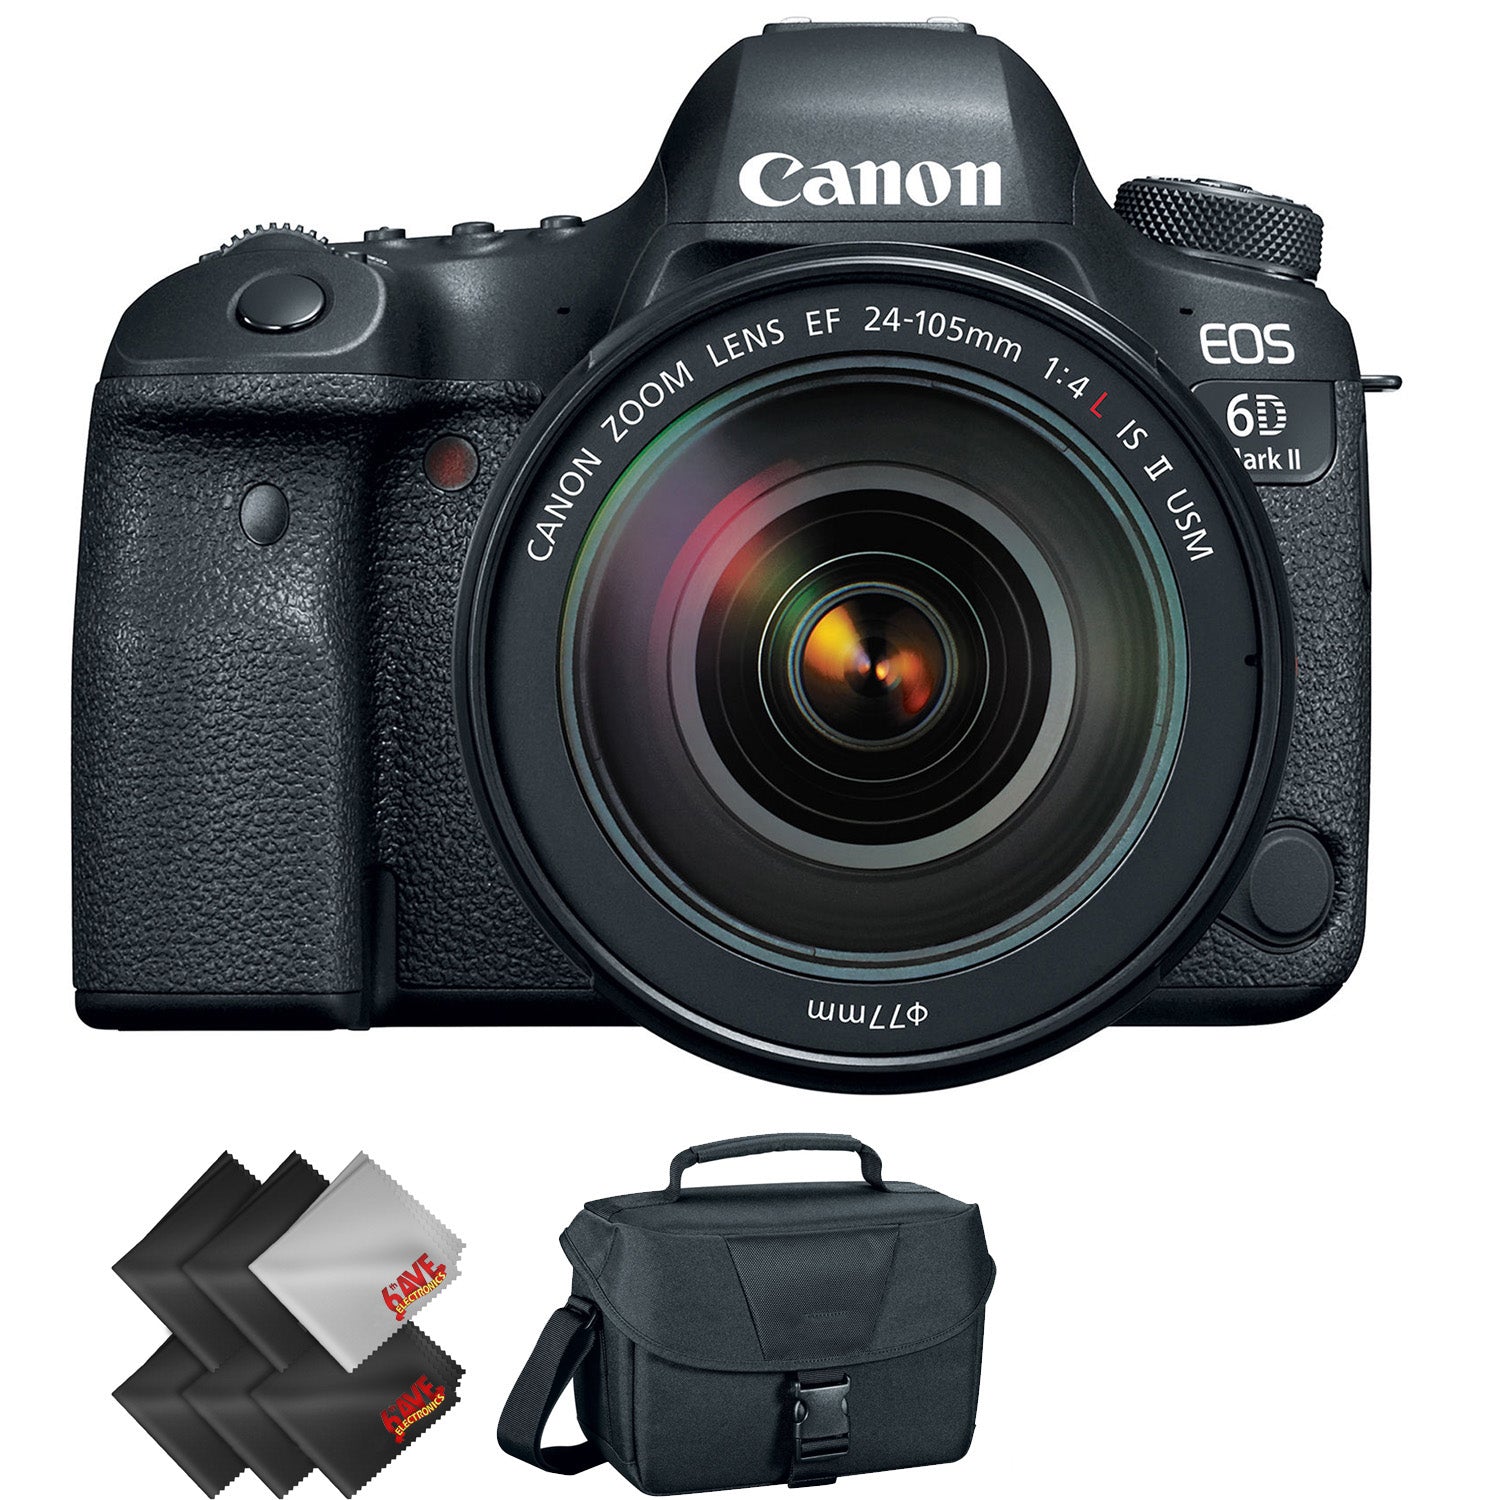 Canon EOS 6D Mark II DSLR Camera with 24-105mm f/4L II Lens + 1 Year Warranty